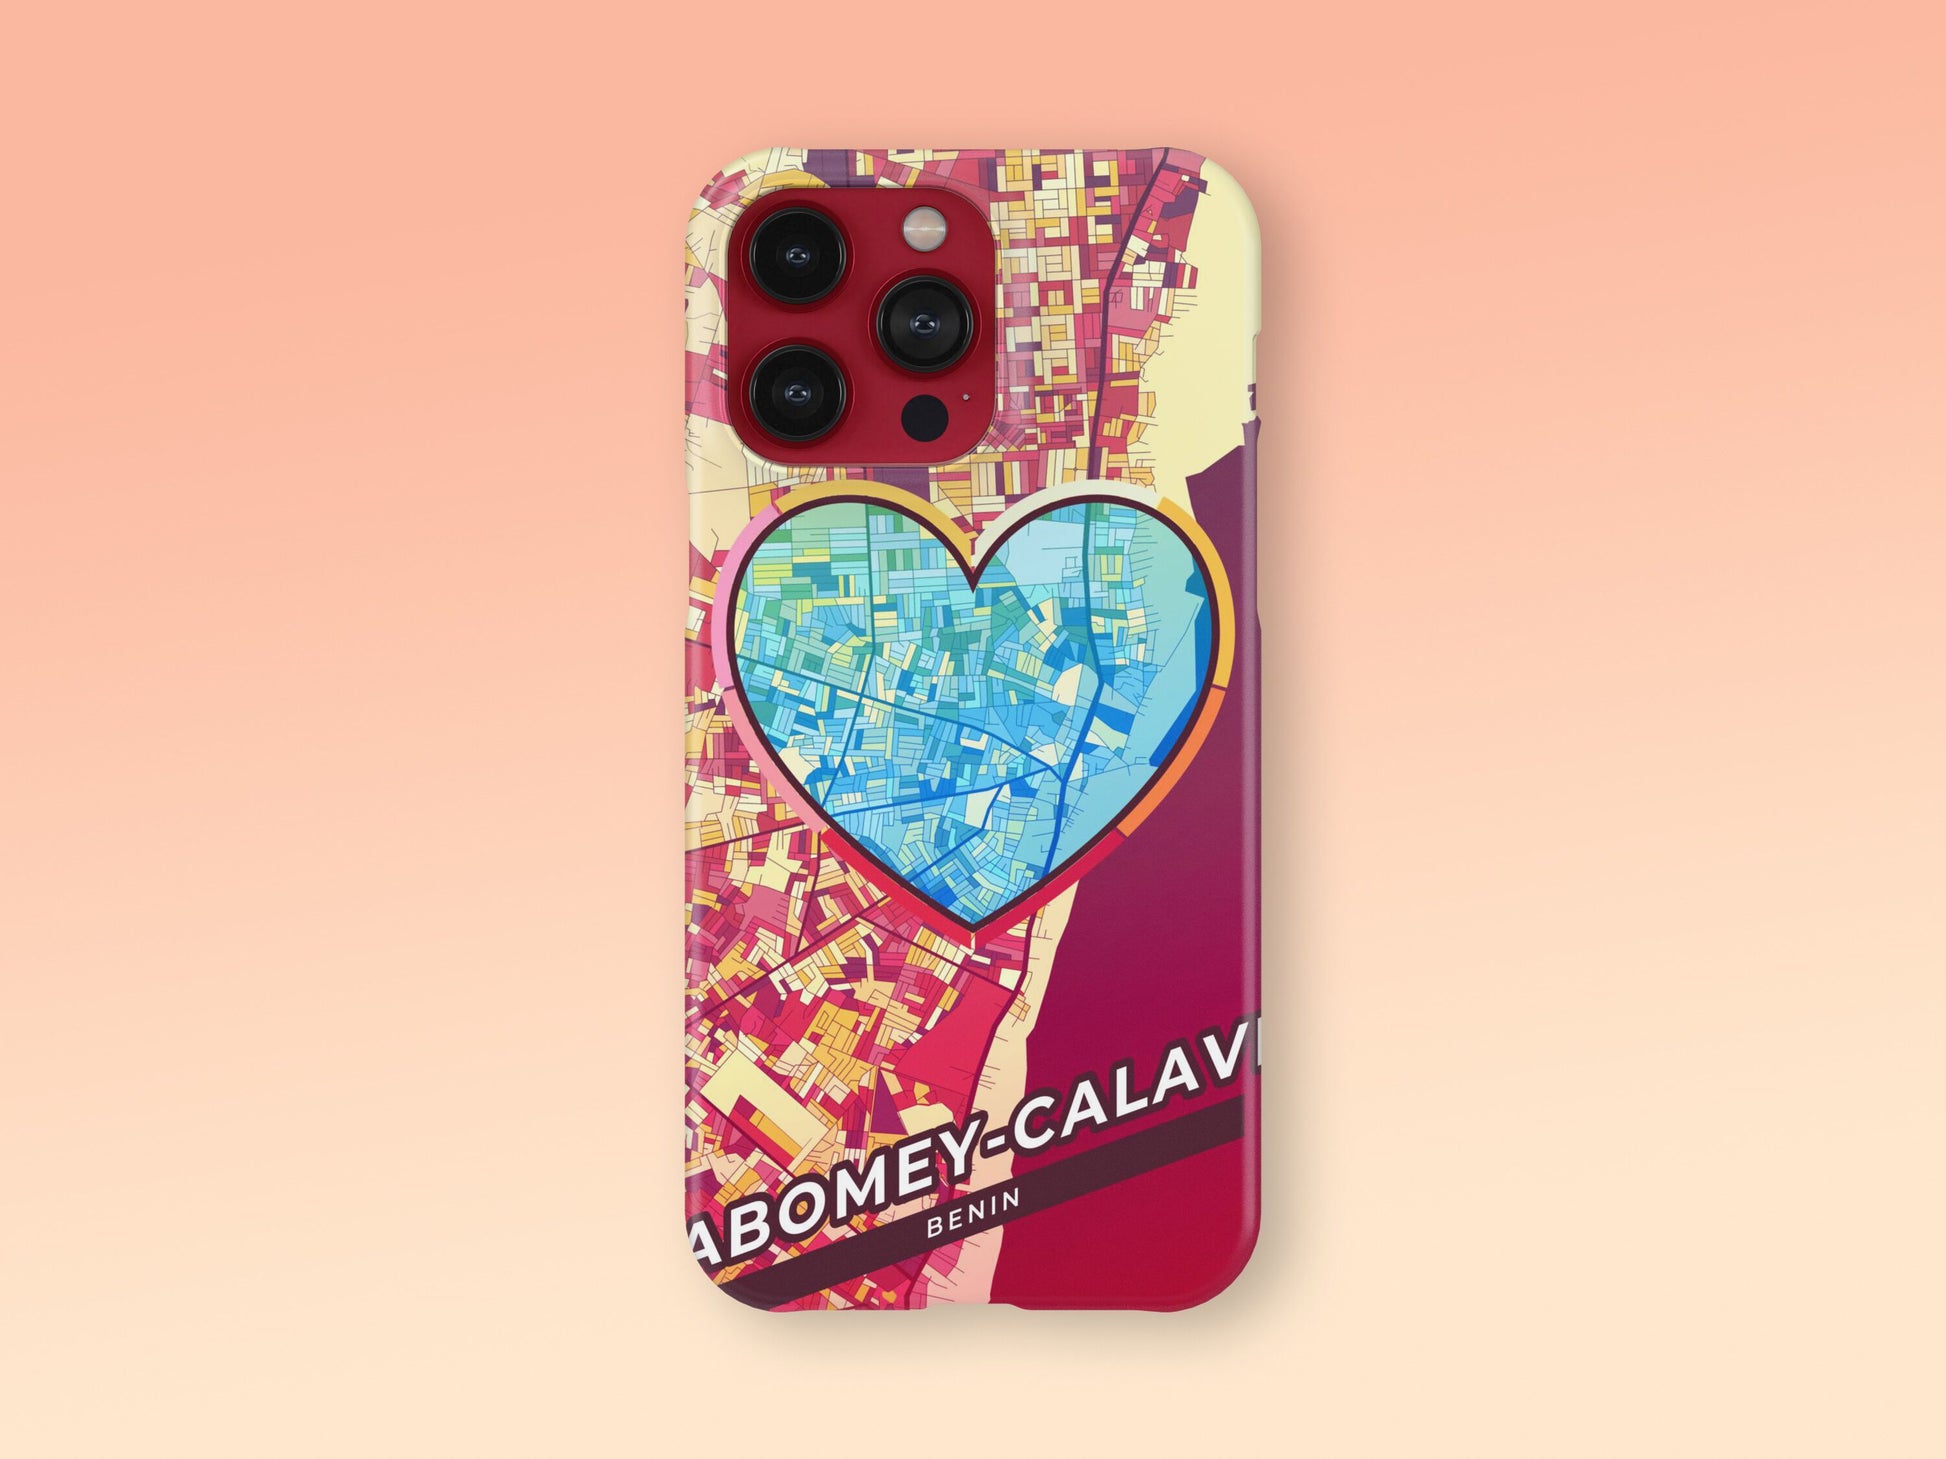 Abomey-Calavi Benin slim phone case with colorful icon. Birthday, wedding or housewarming gift. Couple match cases. 2